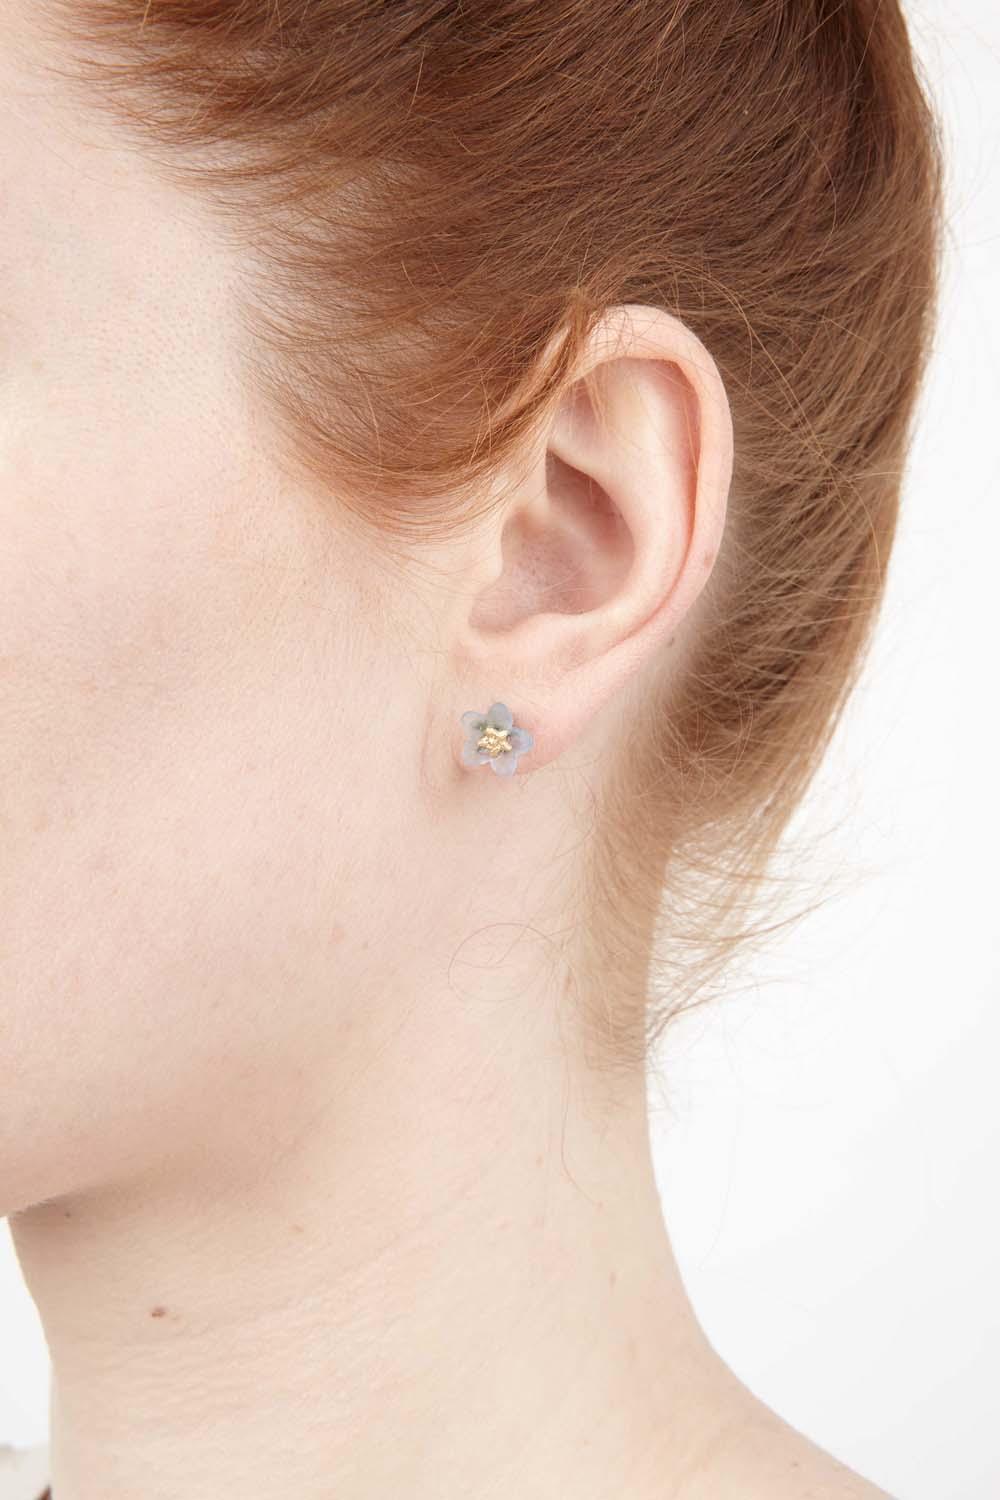 Forget Me Not Earrings - Petite Post - Michael Michaud Jewellery